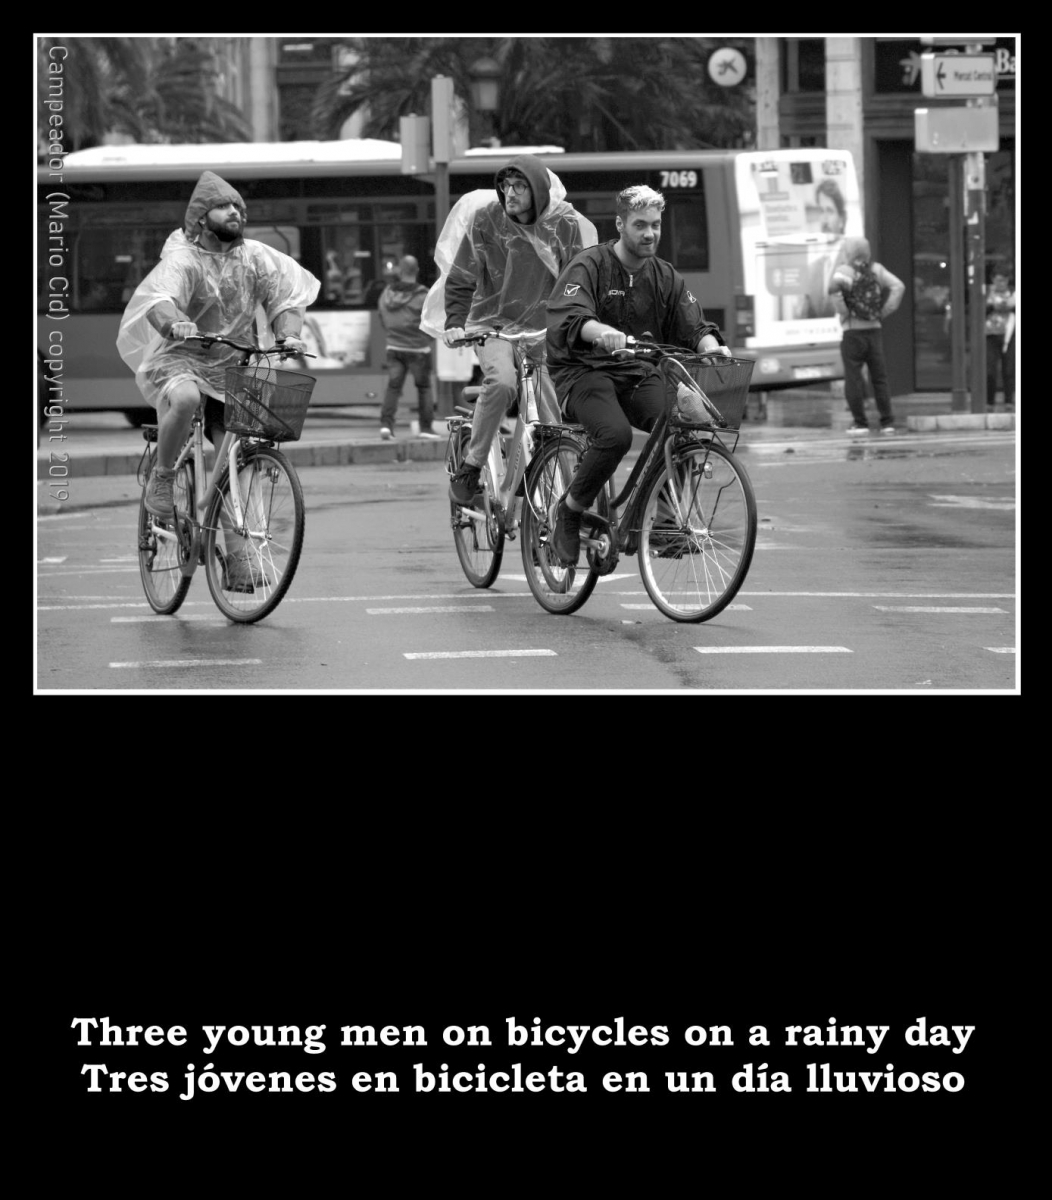 Tres jvenes en bicicleta en un da lluvioso -- Three young men on bicycles on a rainy day. Copyright: Campeador (Mario Cid)